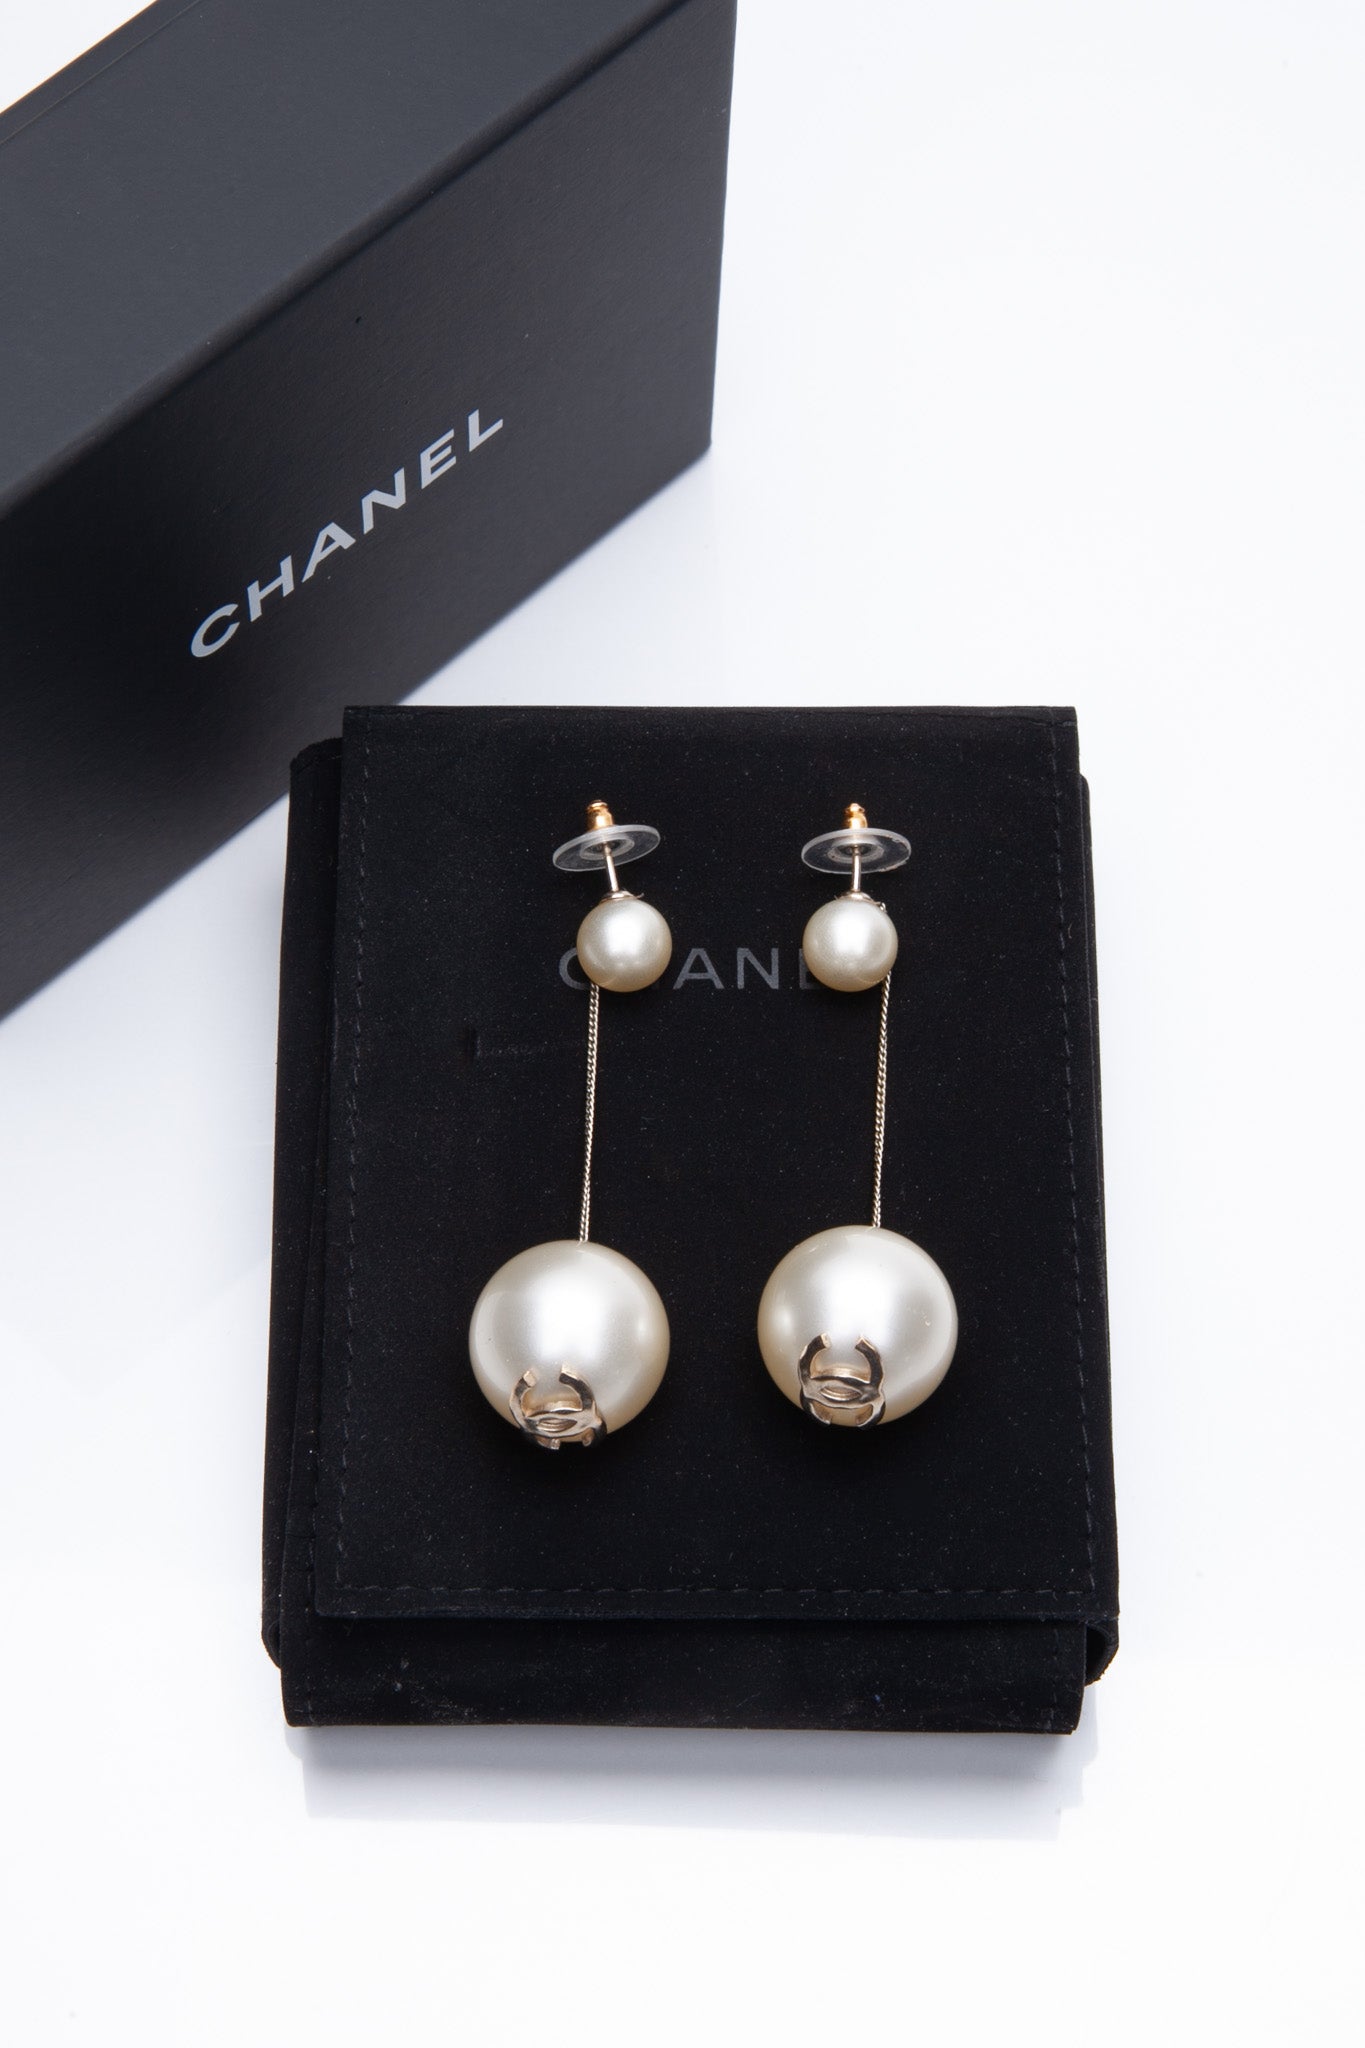 Chanel CC Rhinestone and Gold Metal Dangle Ear Cuff Earrings